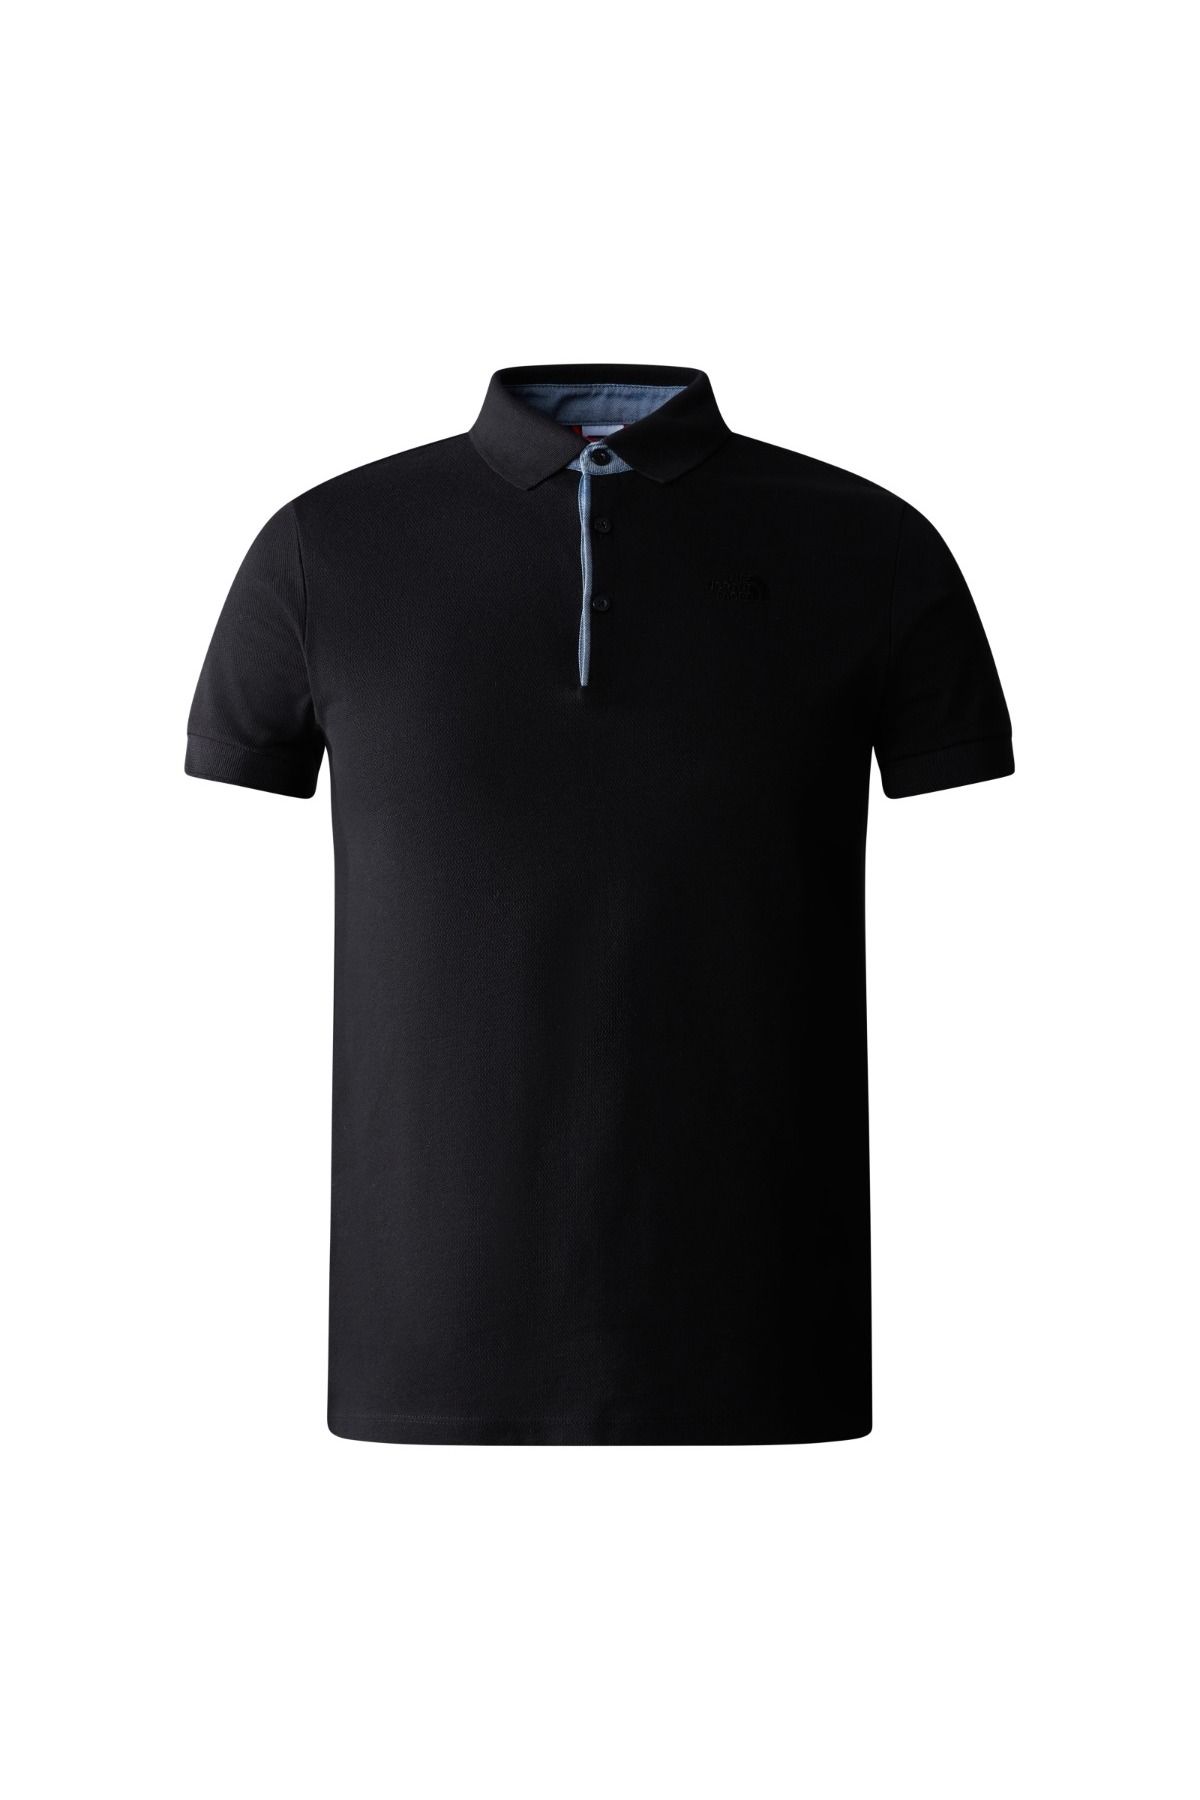 The North Face Premium Piquet Erkek Siyah Polo Tişört